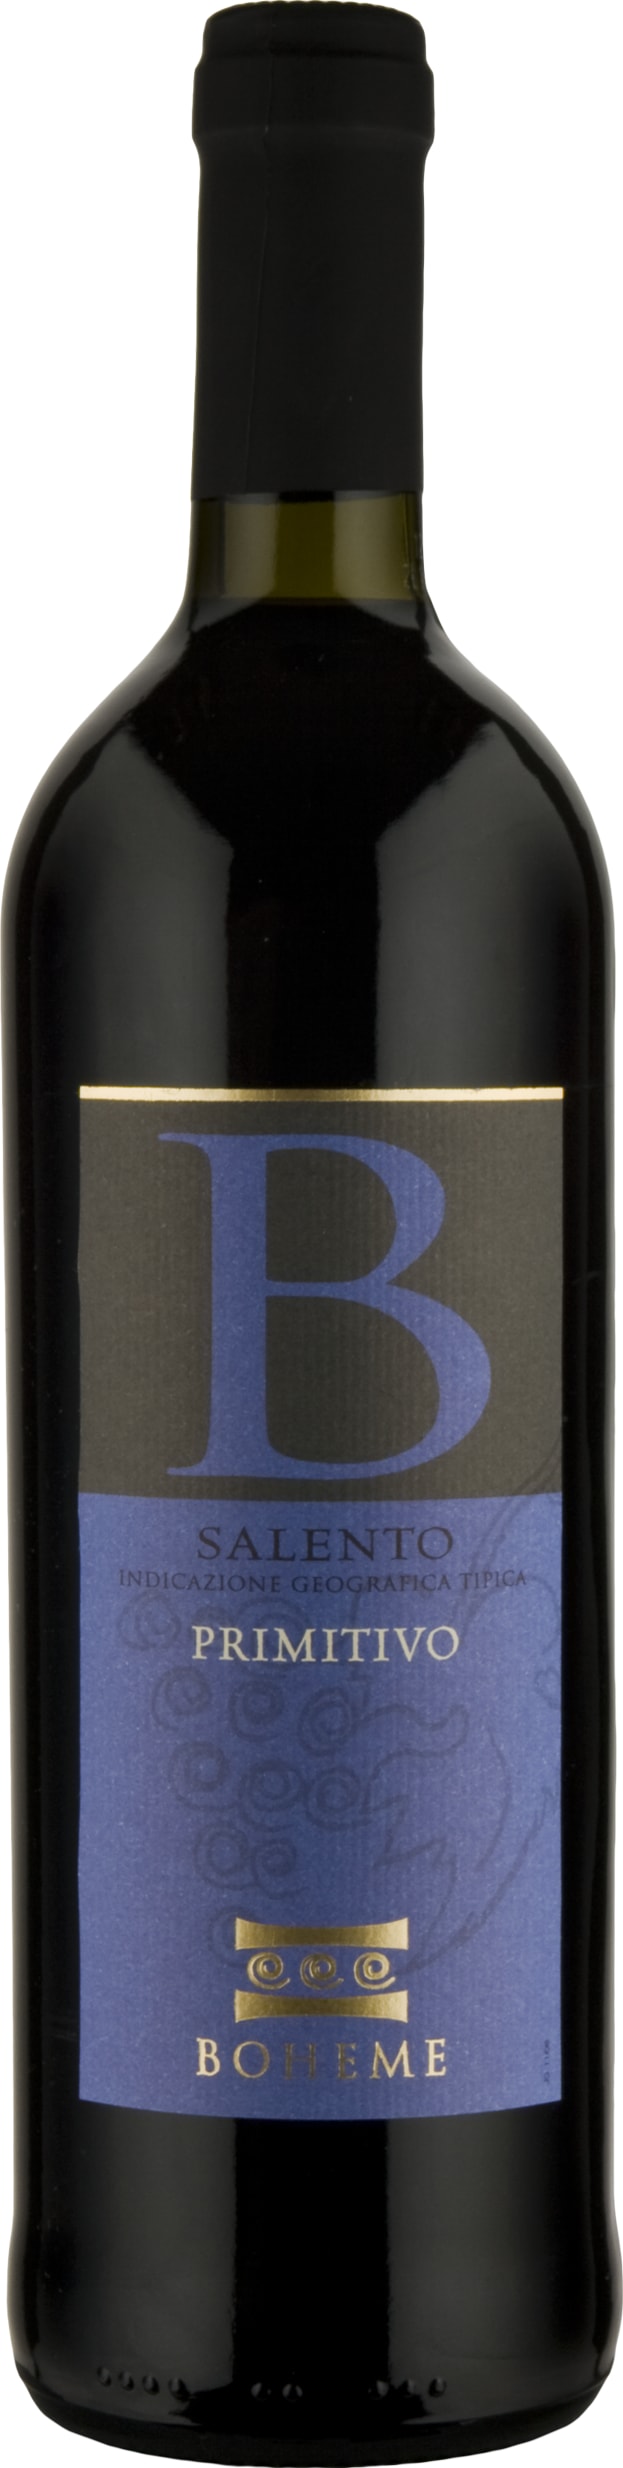 Boheme Primitivo Salento 2022 75cl - Buy Boheme Wines from GREAT WINES DIRECT wine shop